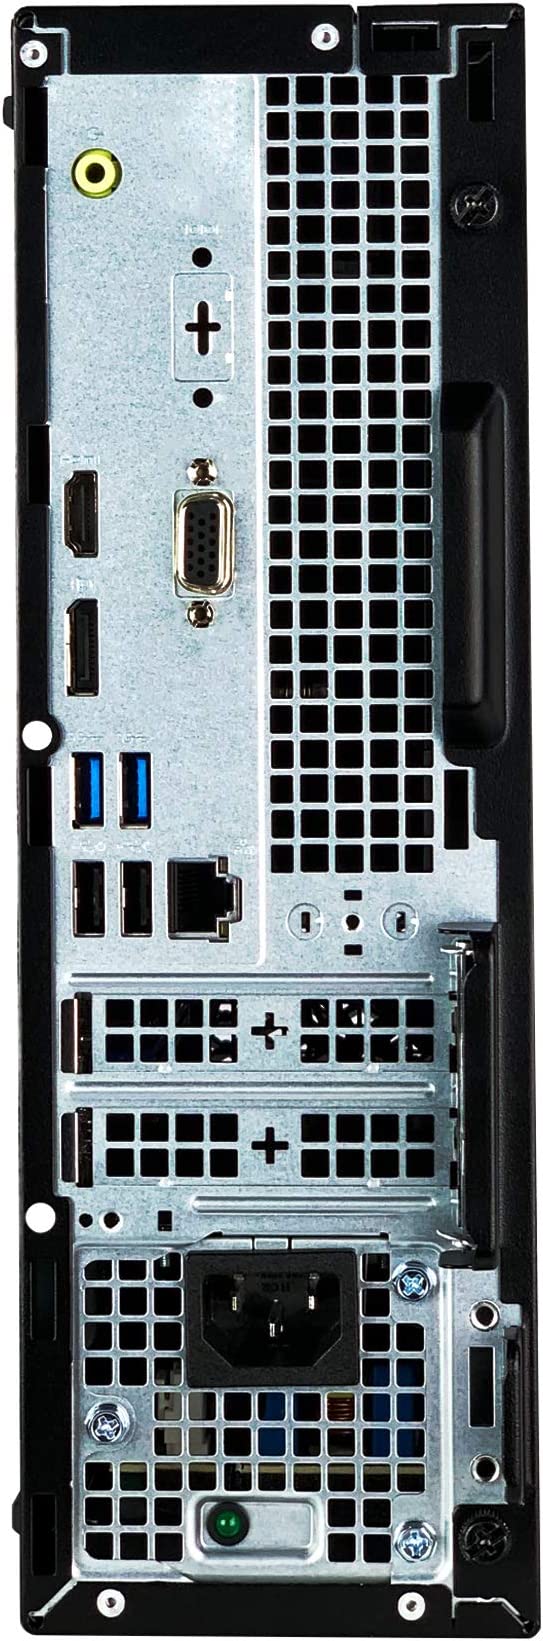 DELL OPTIPLEX 3070 SFF CORE i7-9500 16GB 256GB M.2 PCIe SSD WIN 10 PRO (REFURBISHED)